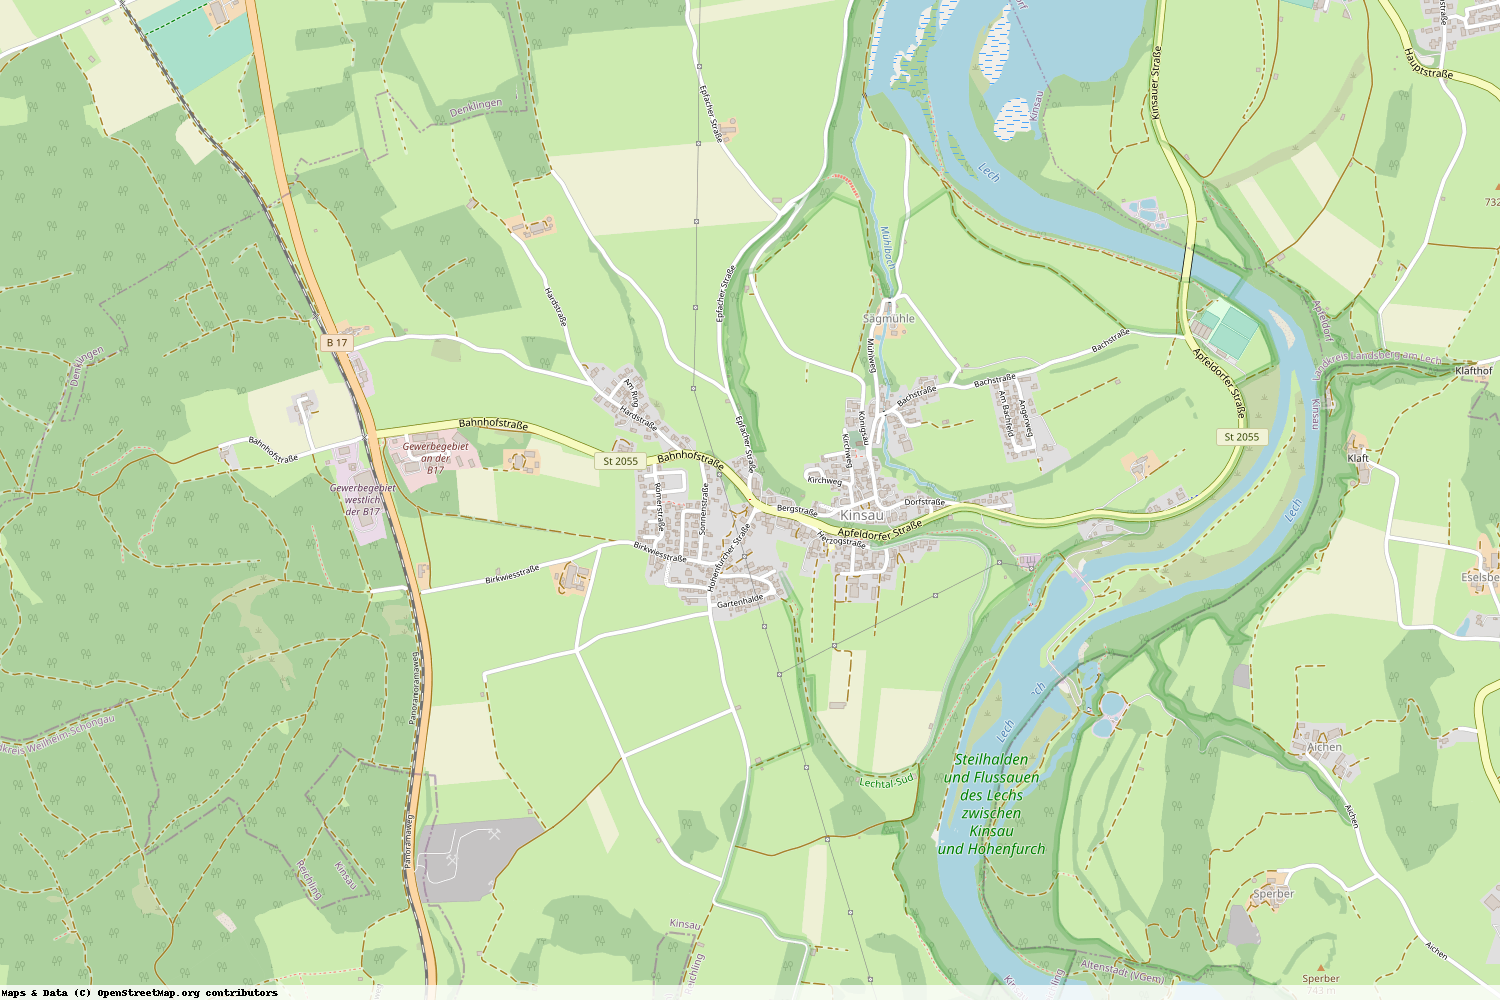 Ist gerade Stromausfall in Bayern - Landsberg am Lech - Kinsau?